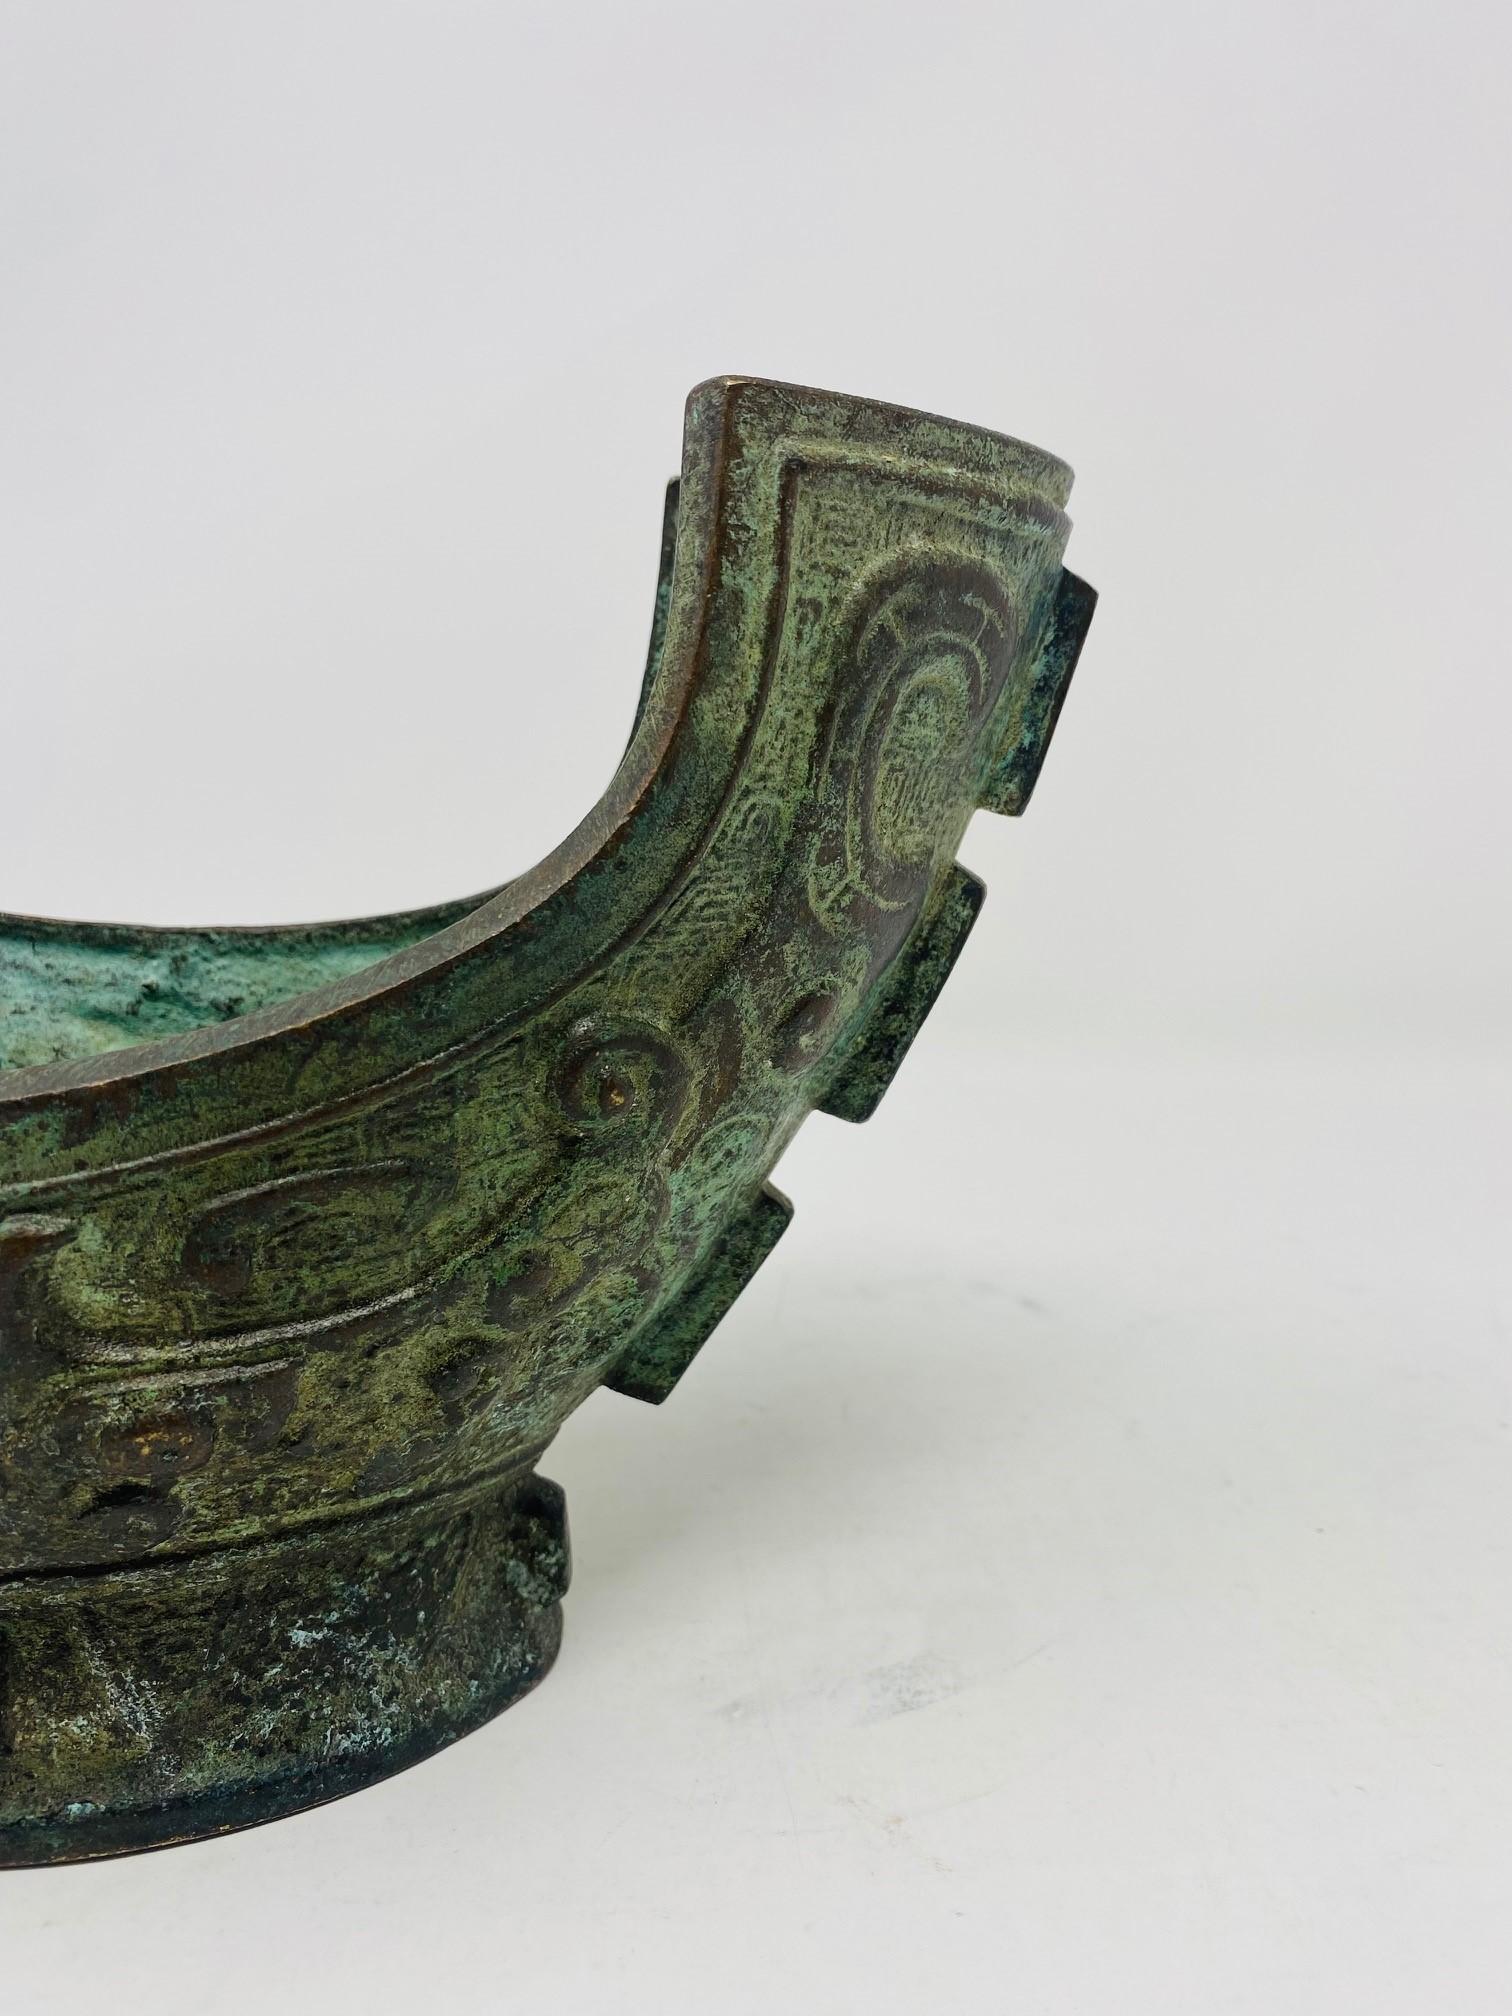 Vintage Midcentury Chinese Bronze Brutalist Style Vase Vessel For Sale 3